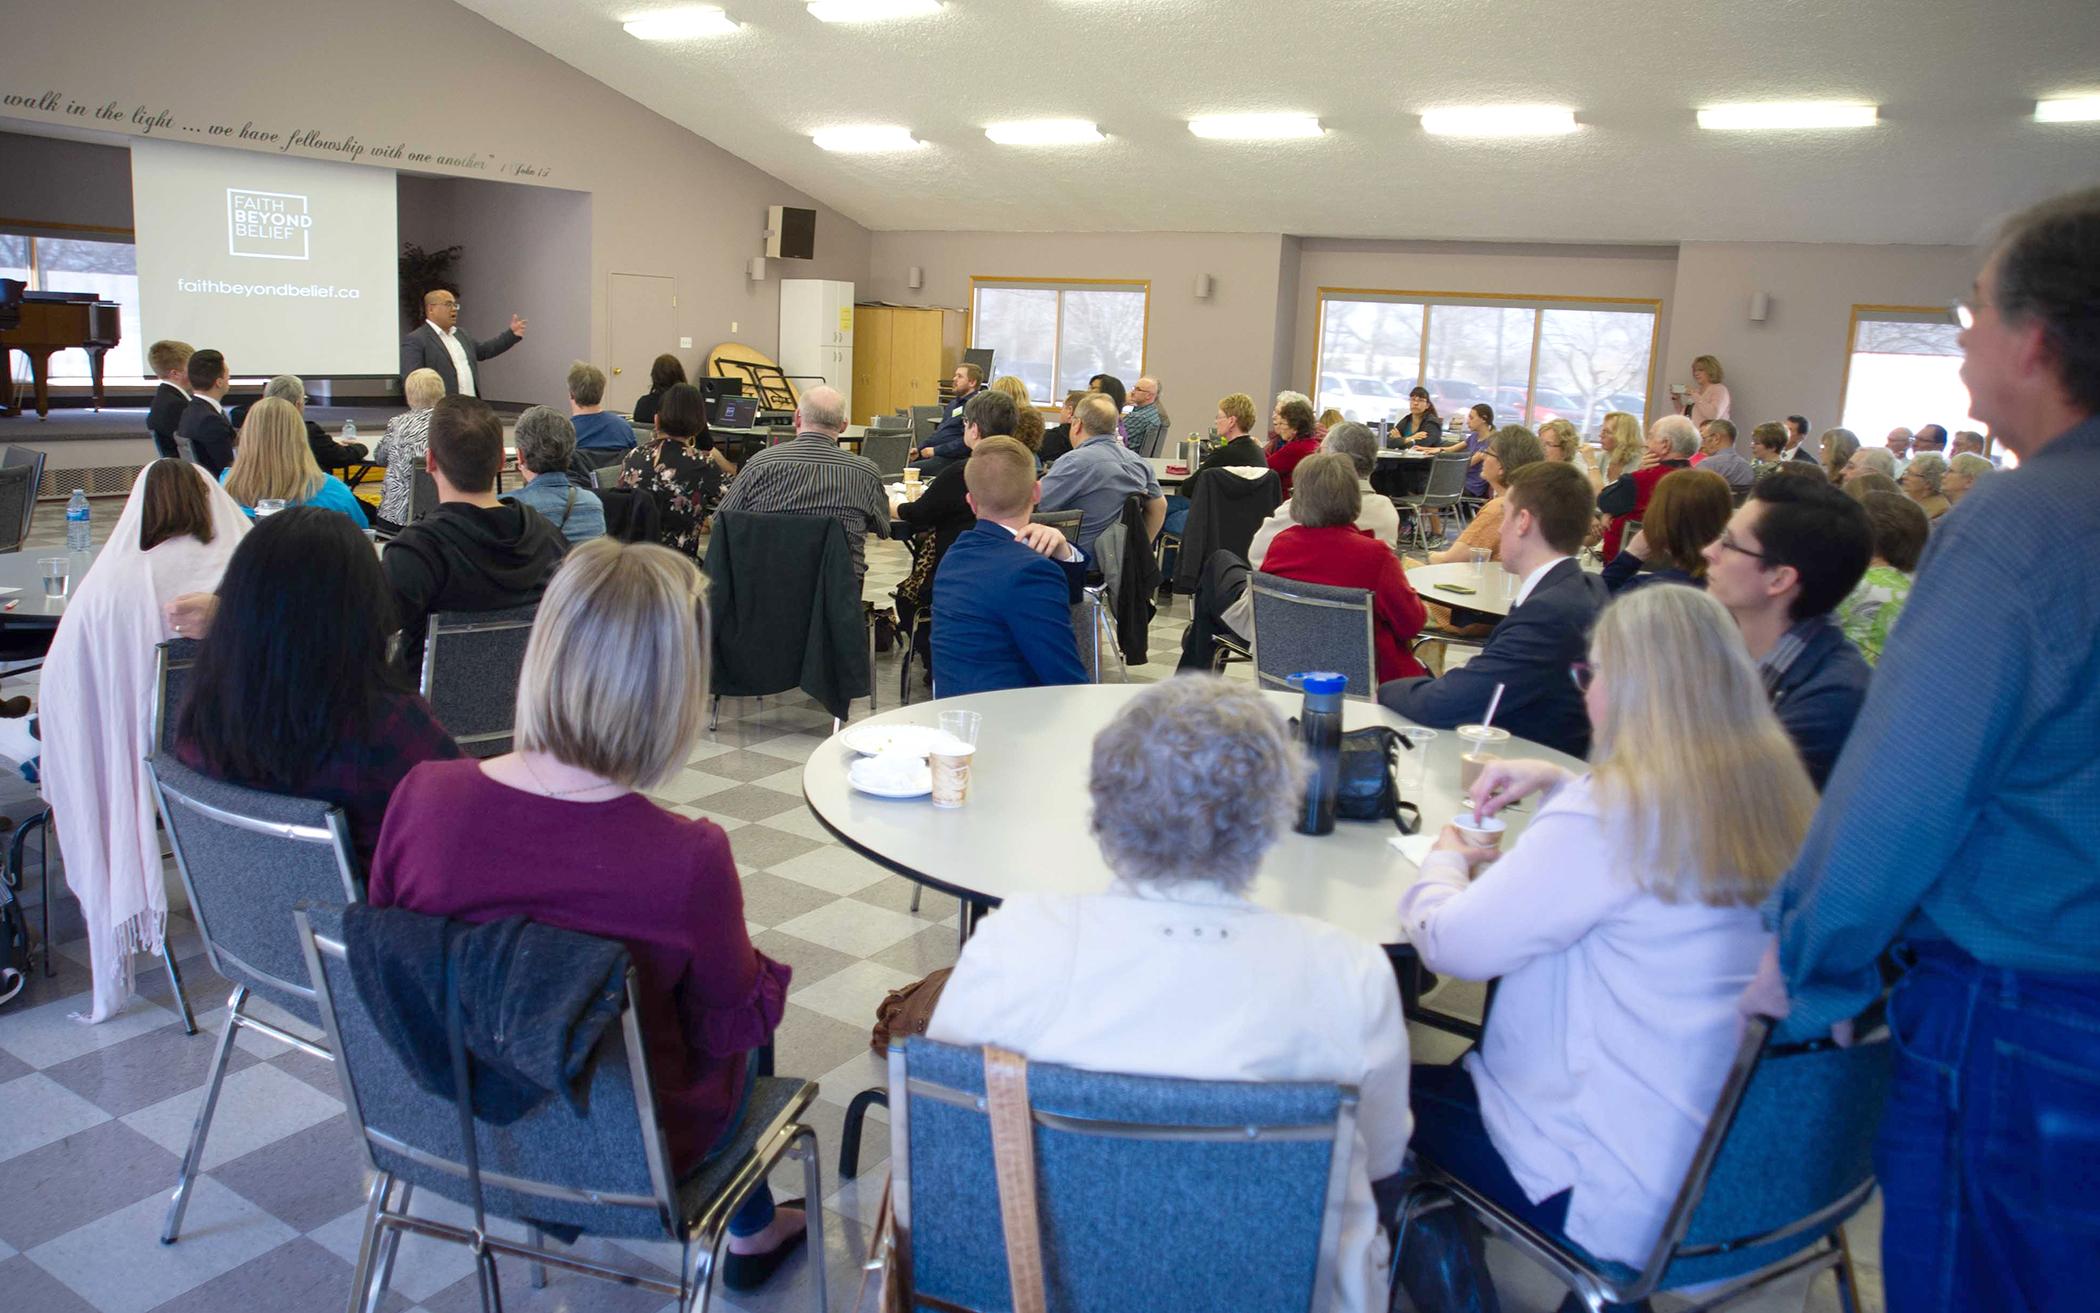 Alberta Church Hosts Interfaith Conference on Family